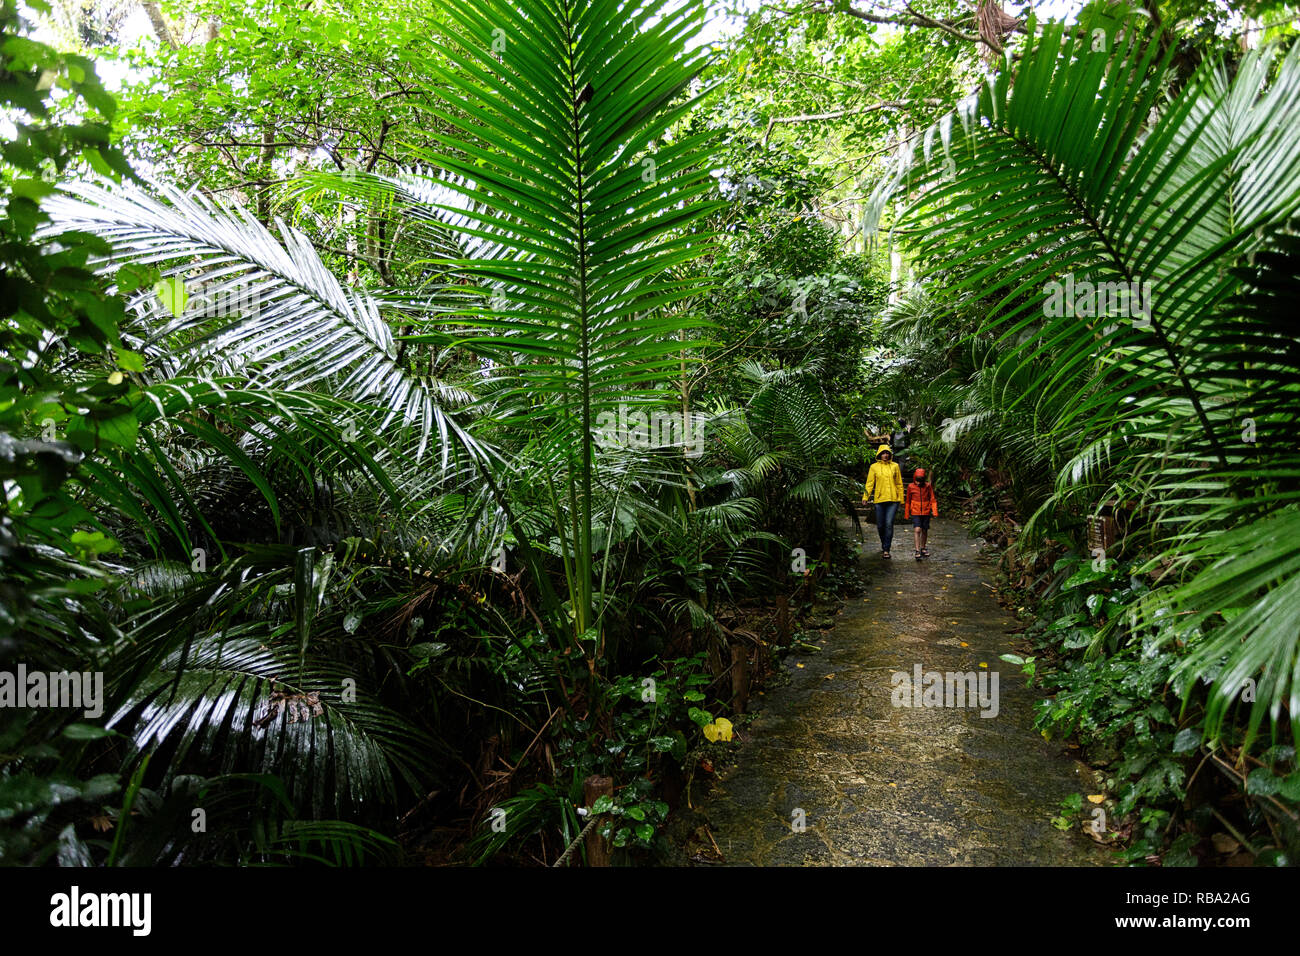 Mother and son in rain jackets on the trail at Yonehara palm tree grove, Ishigaki, Japan Stock Photo